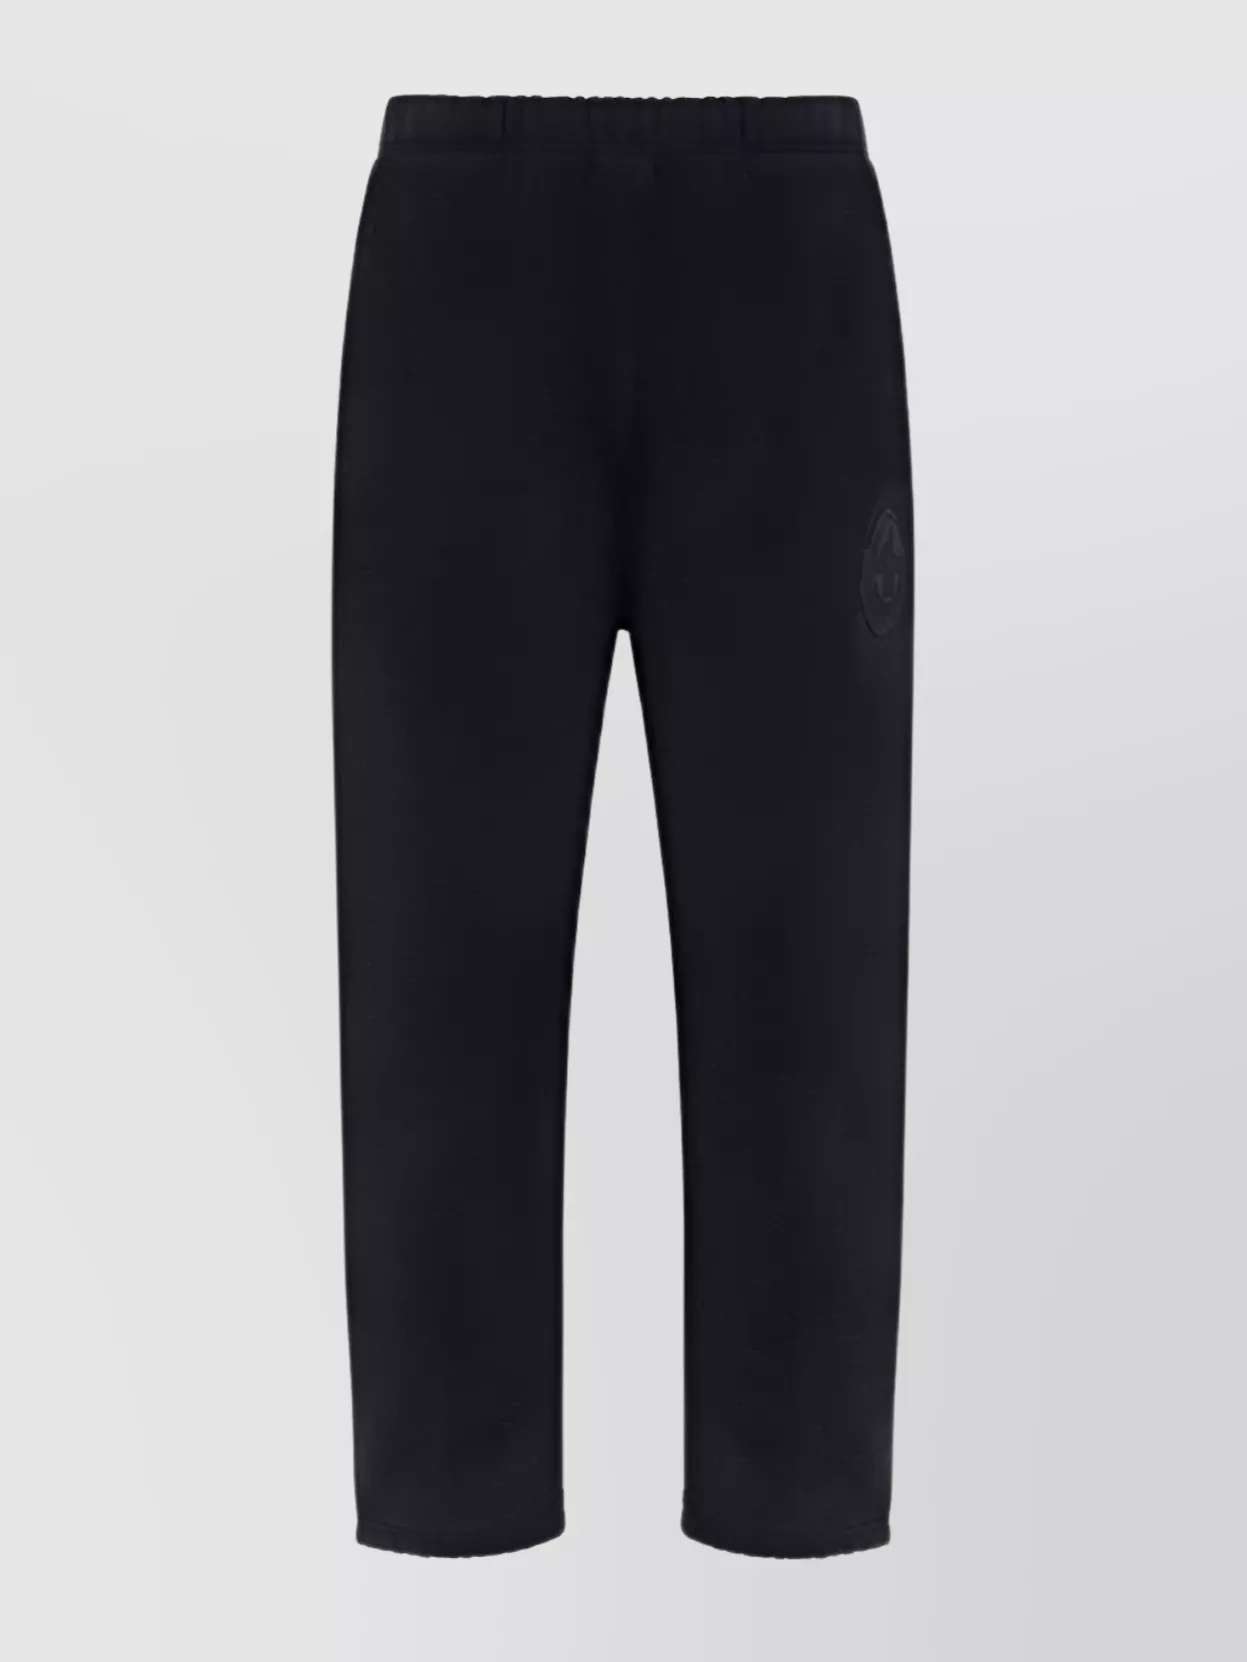 Moncler Genius Jay-z X Moncler Sweatpants In Black